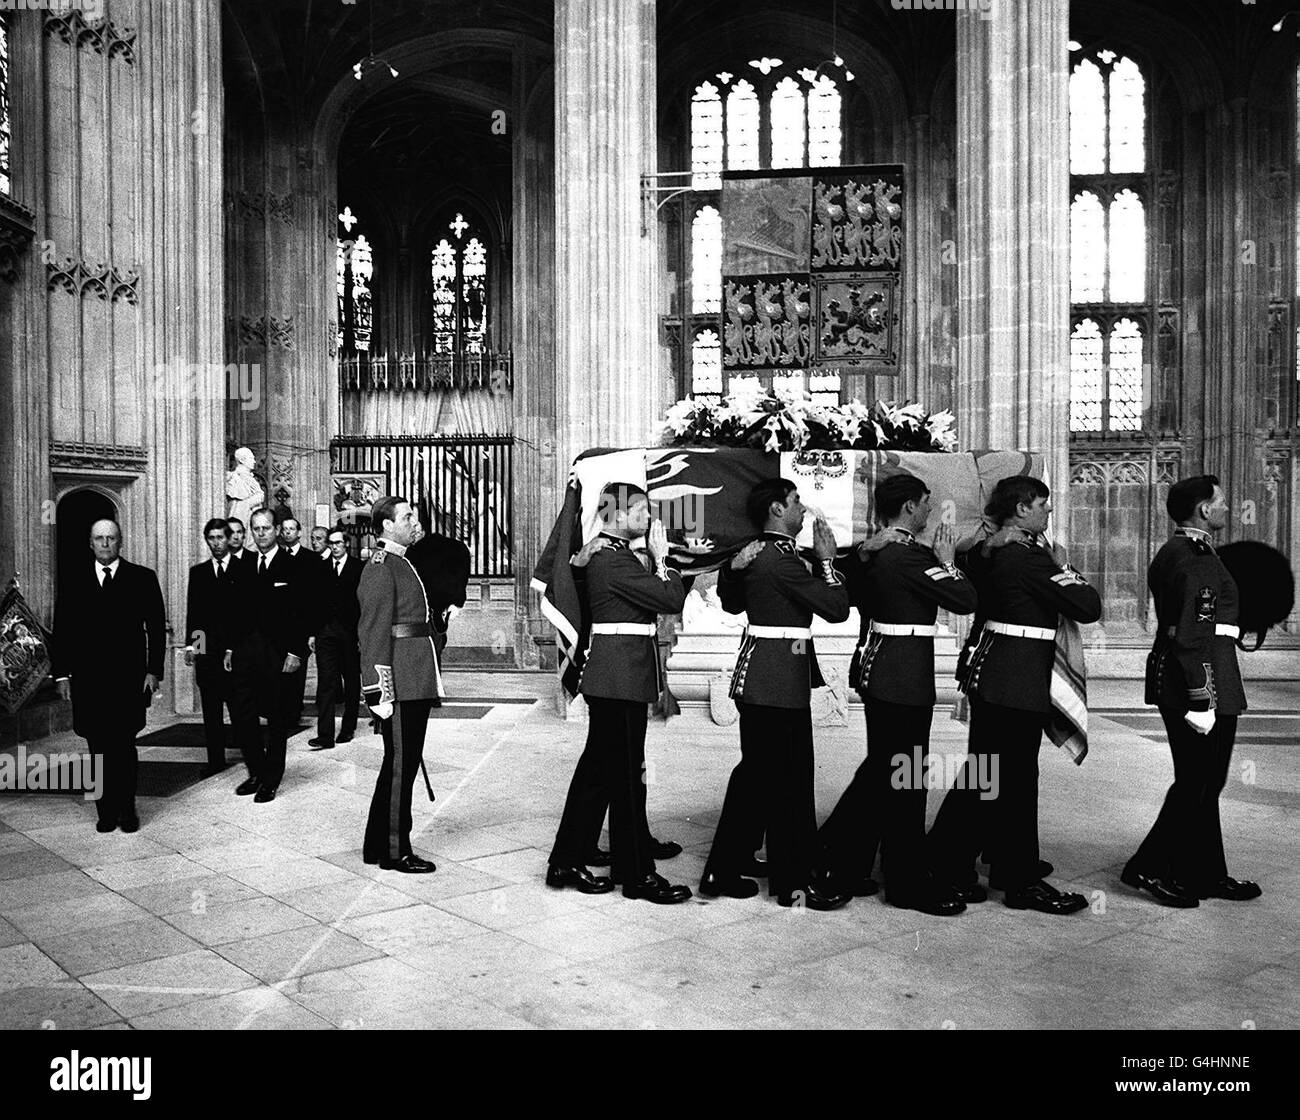 Royalty - Duke of Windsor Death - Windsor Stock Photo - Alamy